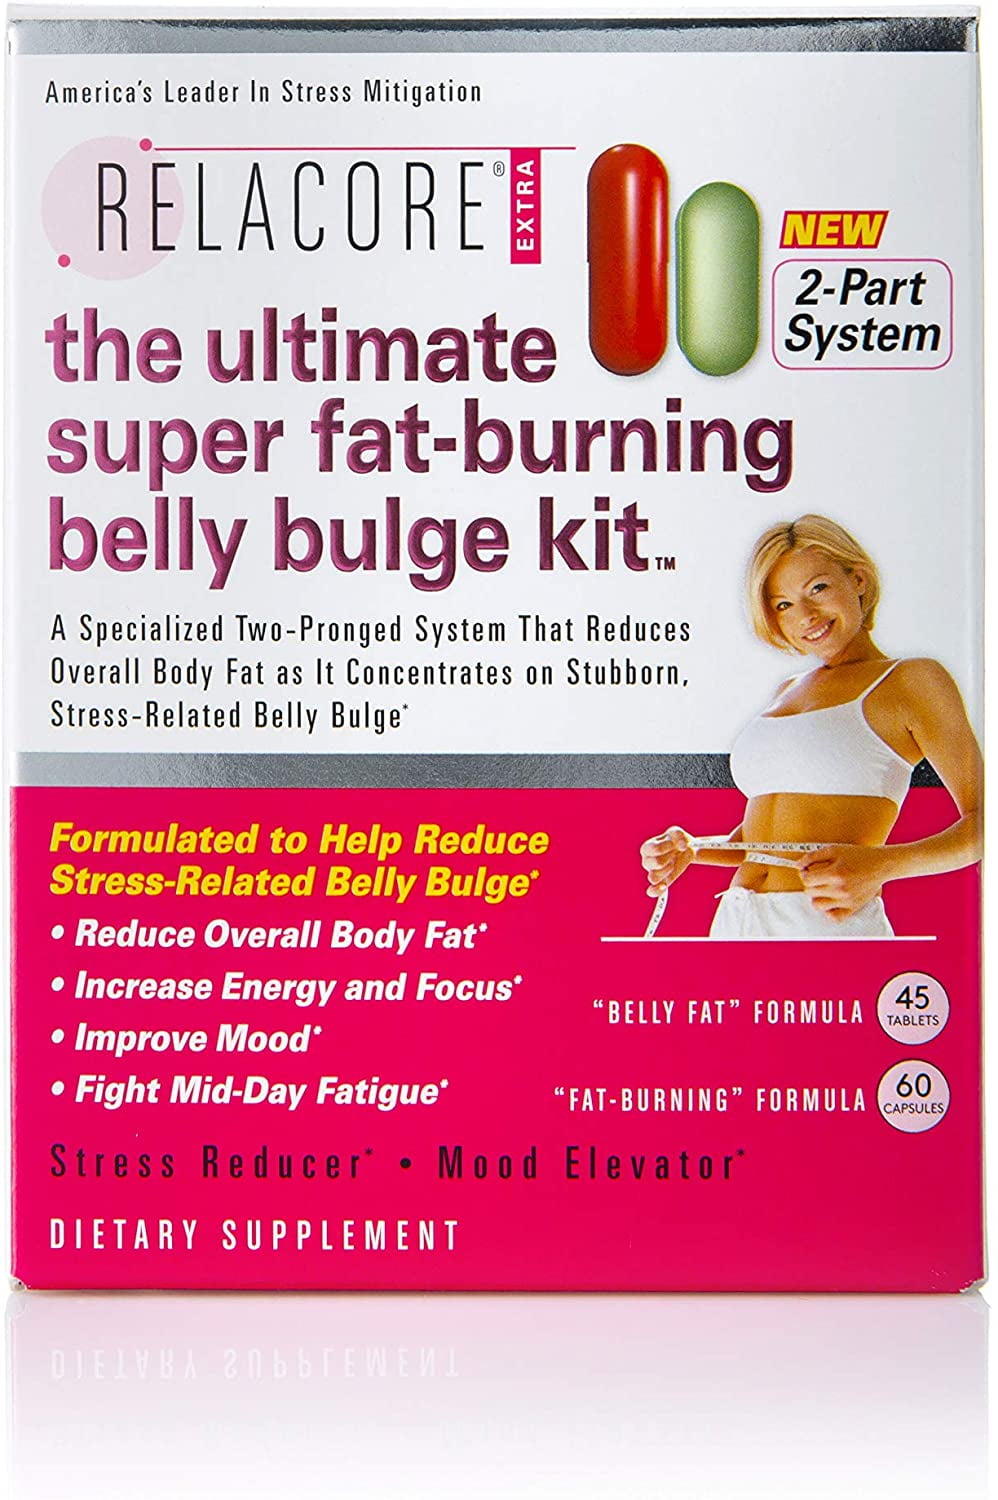 Belly fat blaster kit